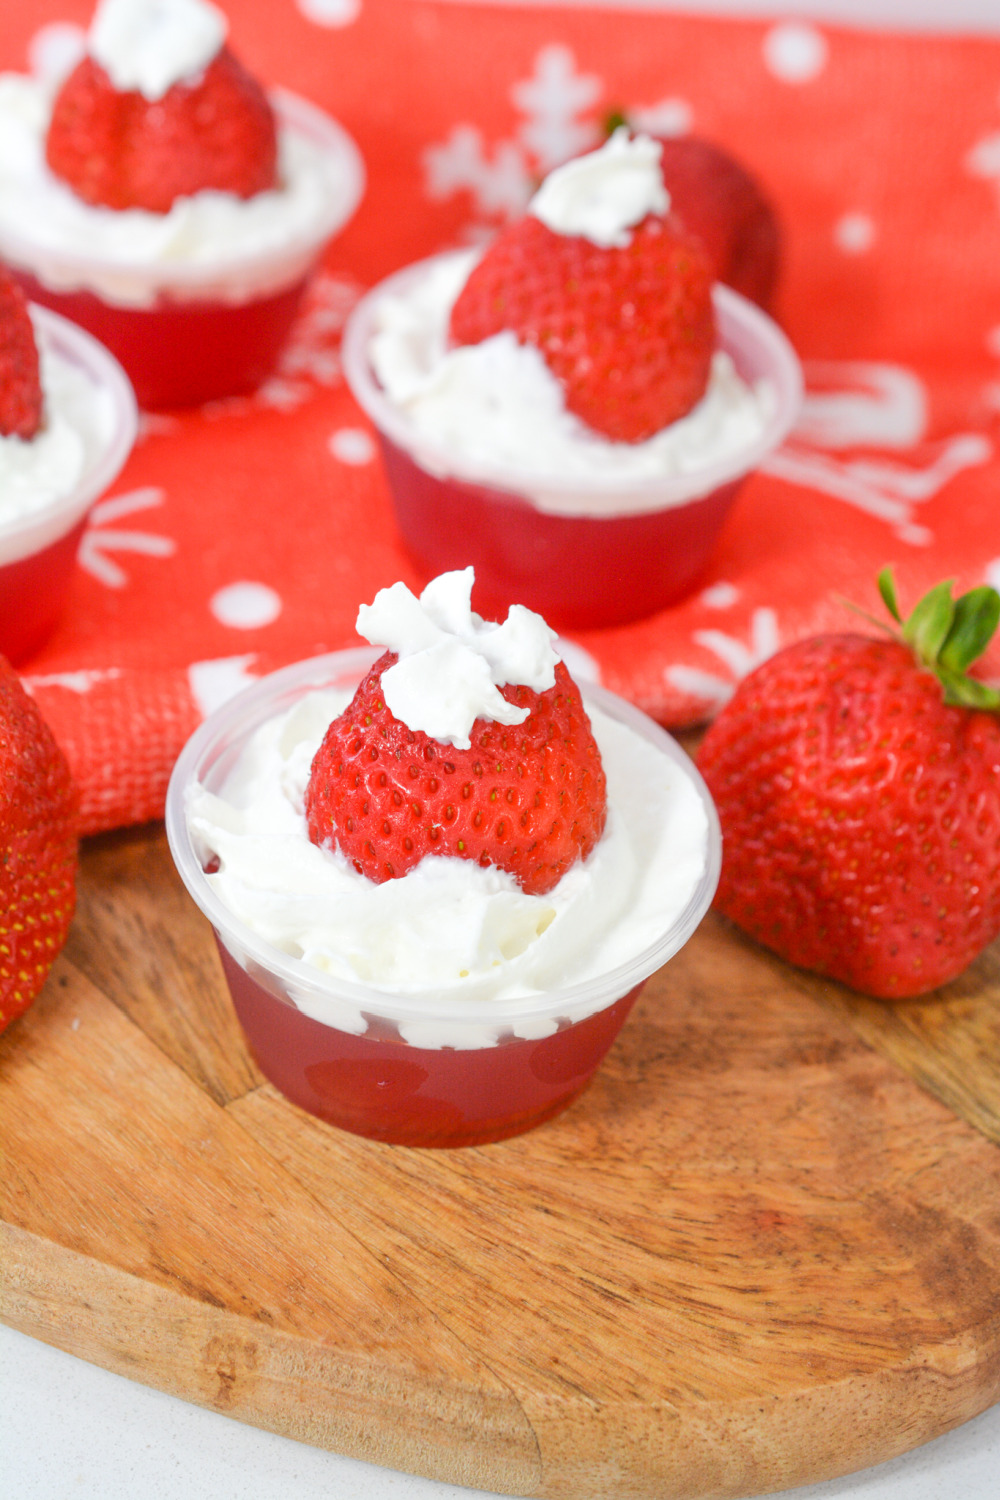 Whip up these Santa Hat Jello Shots using strawberry Jell-O, strawberries and whipped cream - a tasty strawberry jello shot recipe.